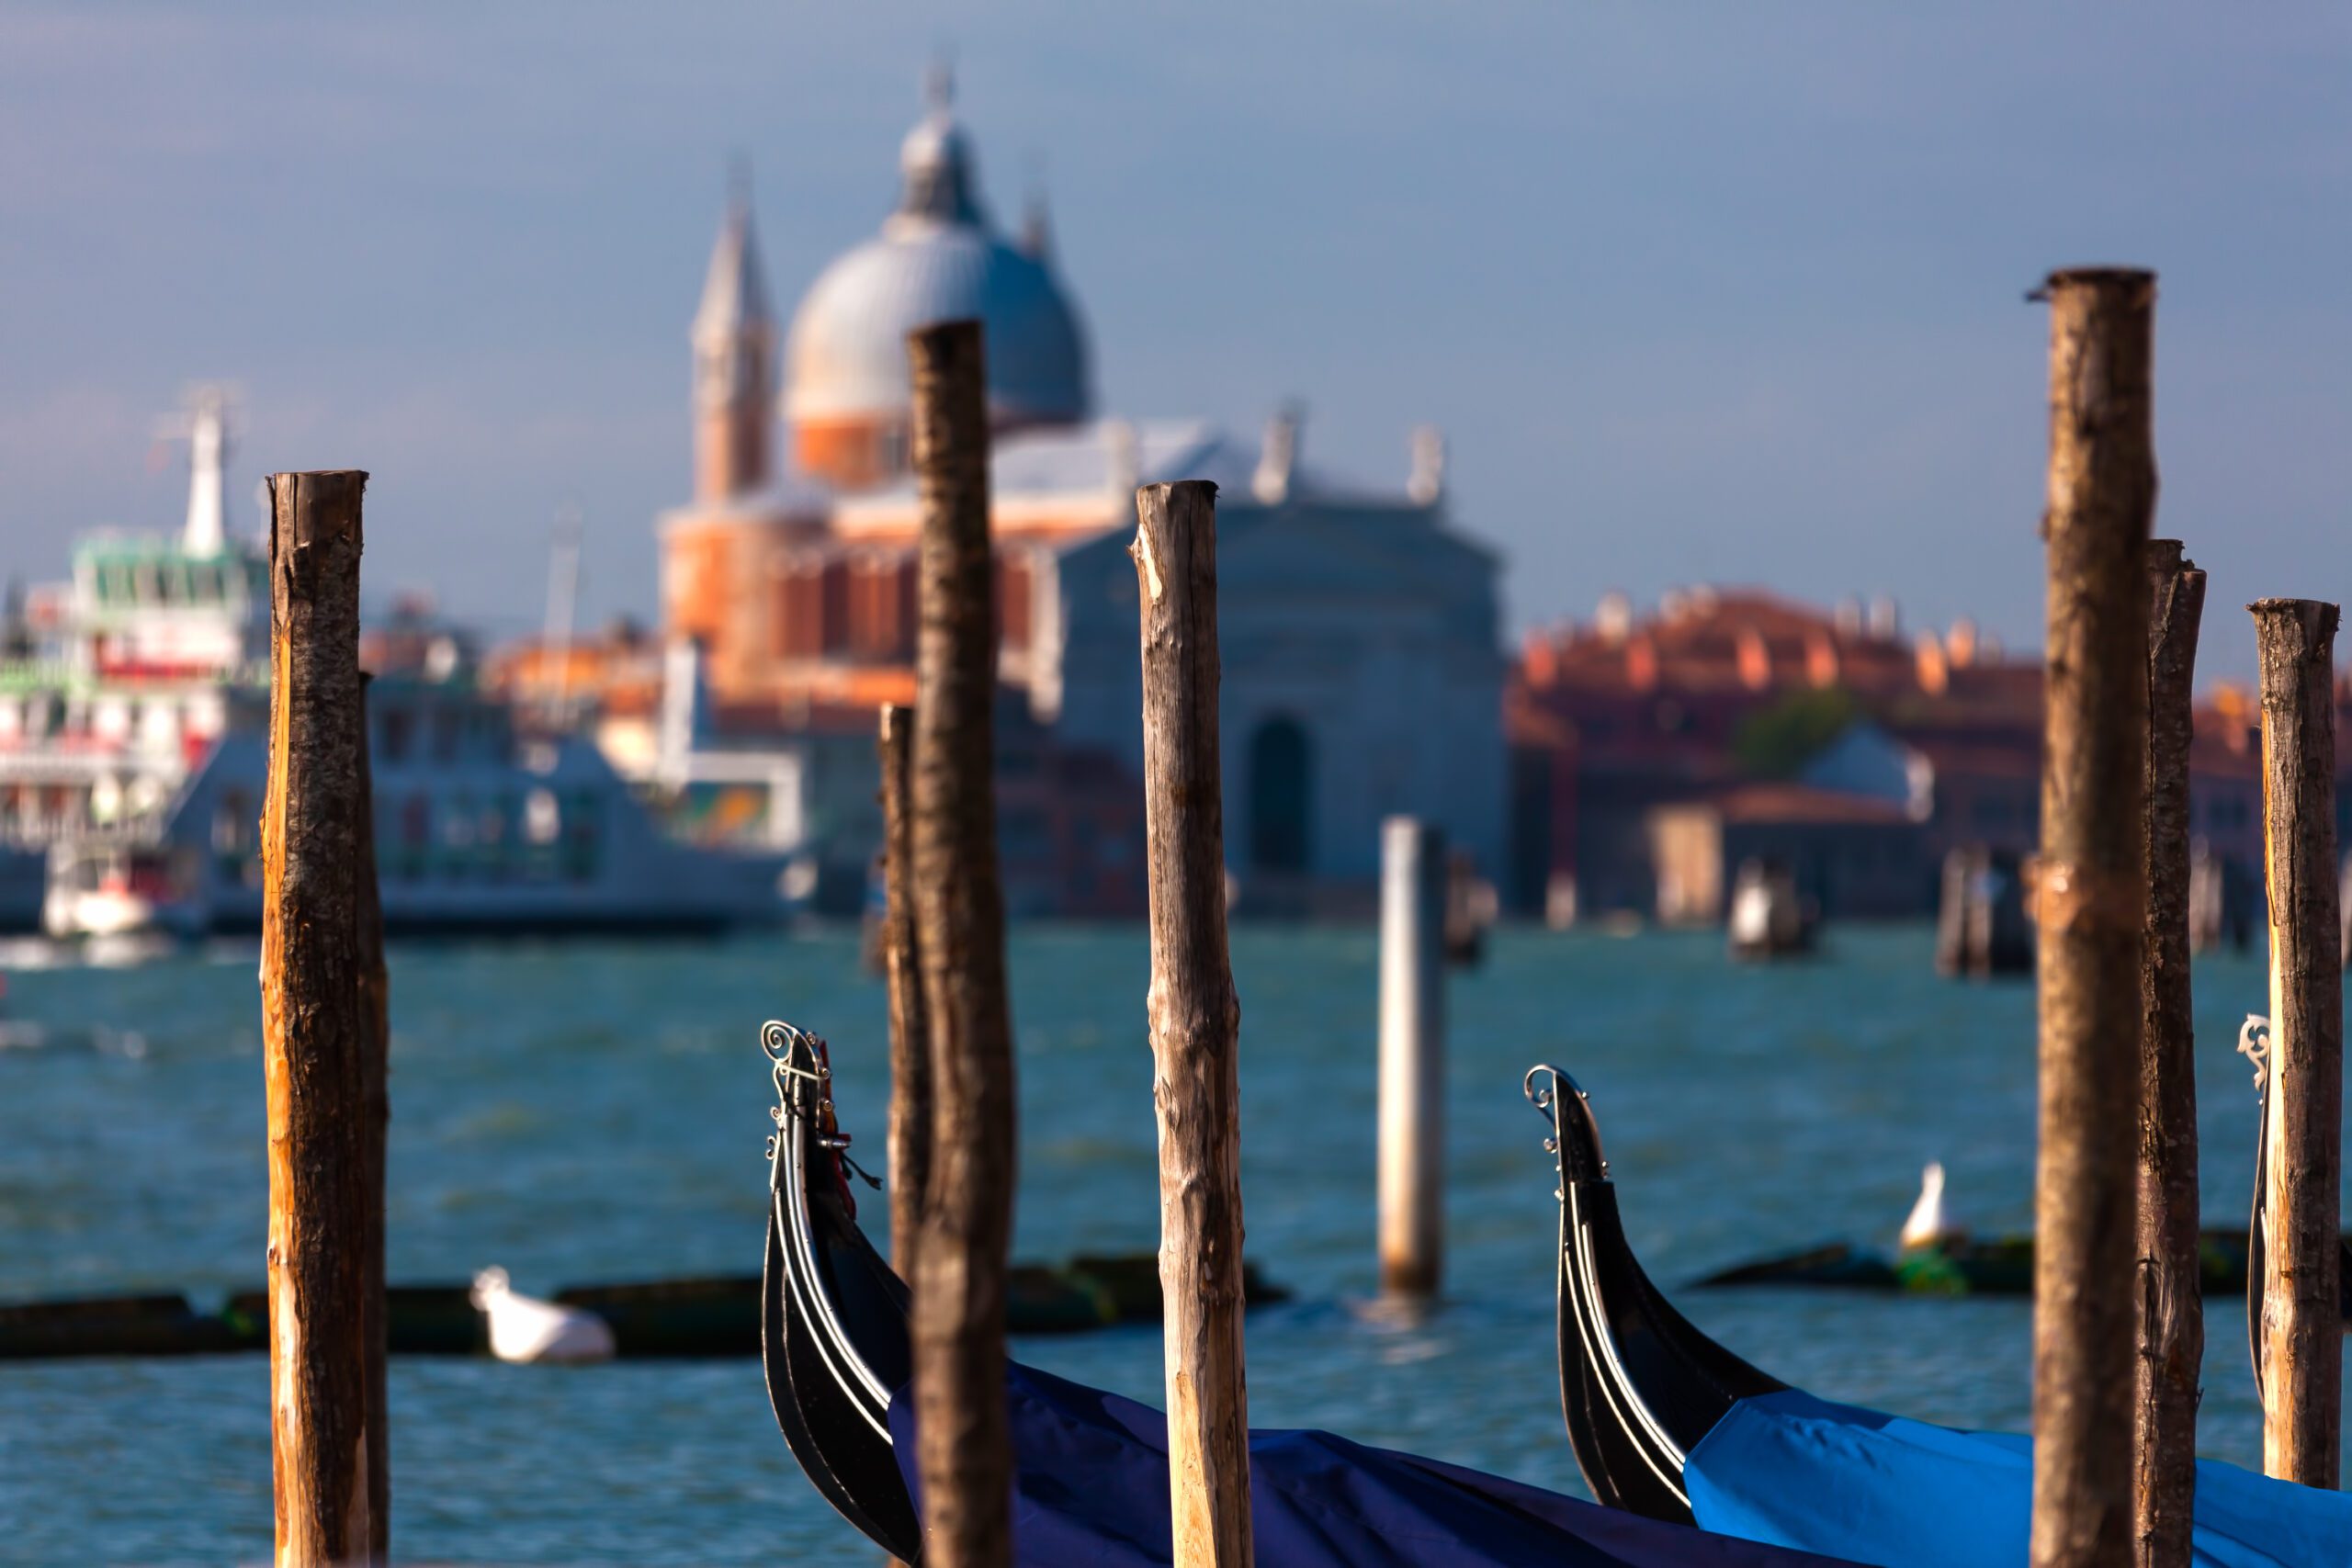 Venetian gondola with historic basilicas in background